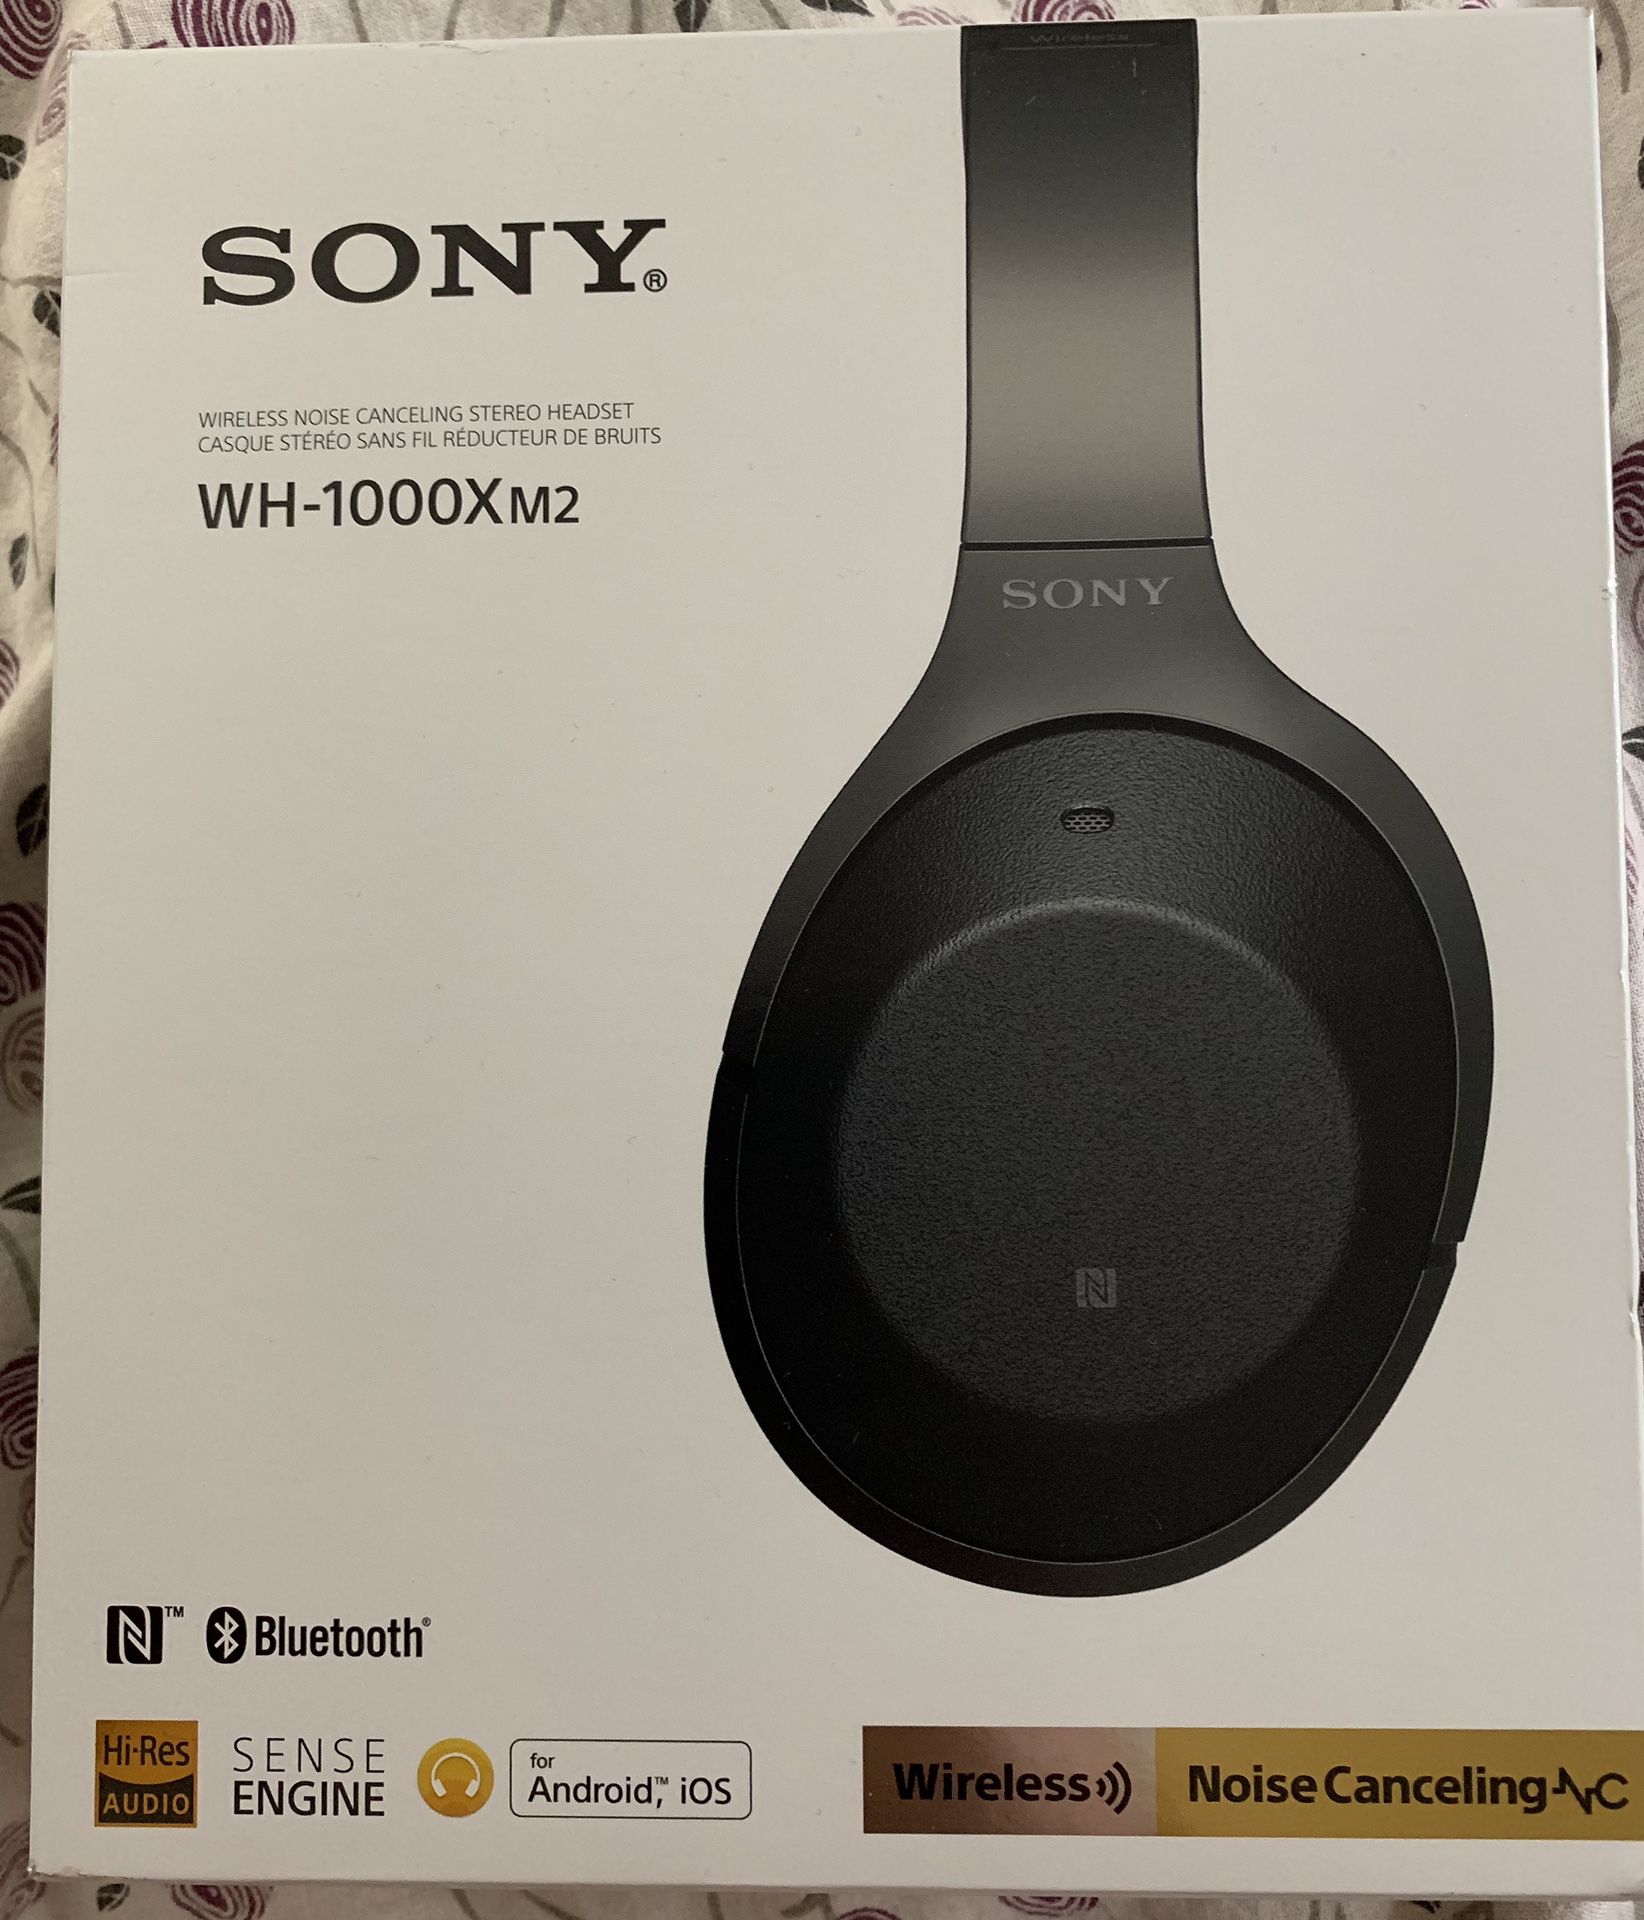 Sony 1000XM2 wireless noise cancelling headphones